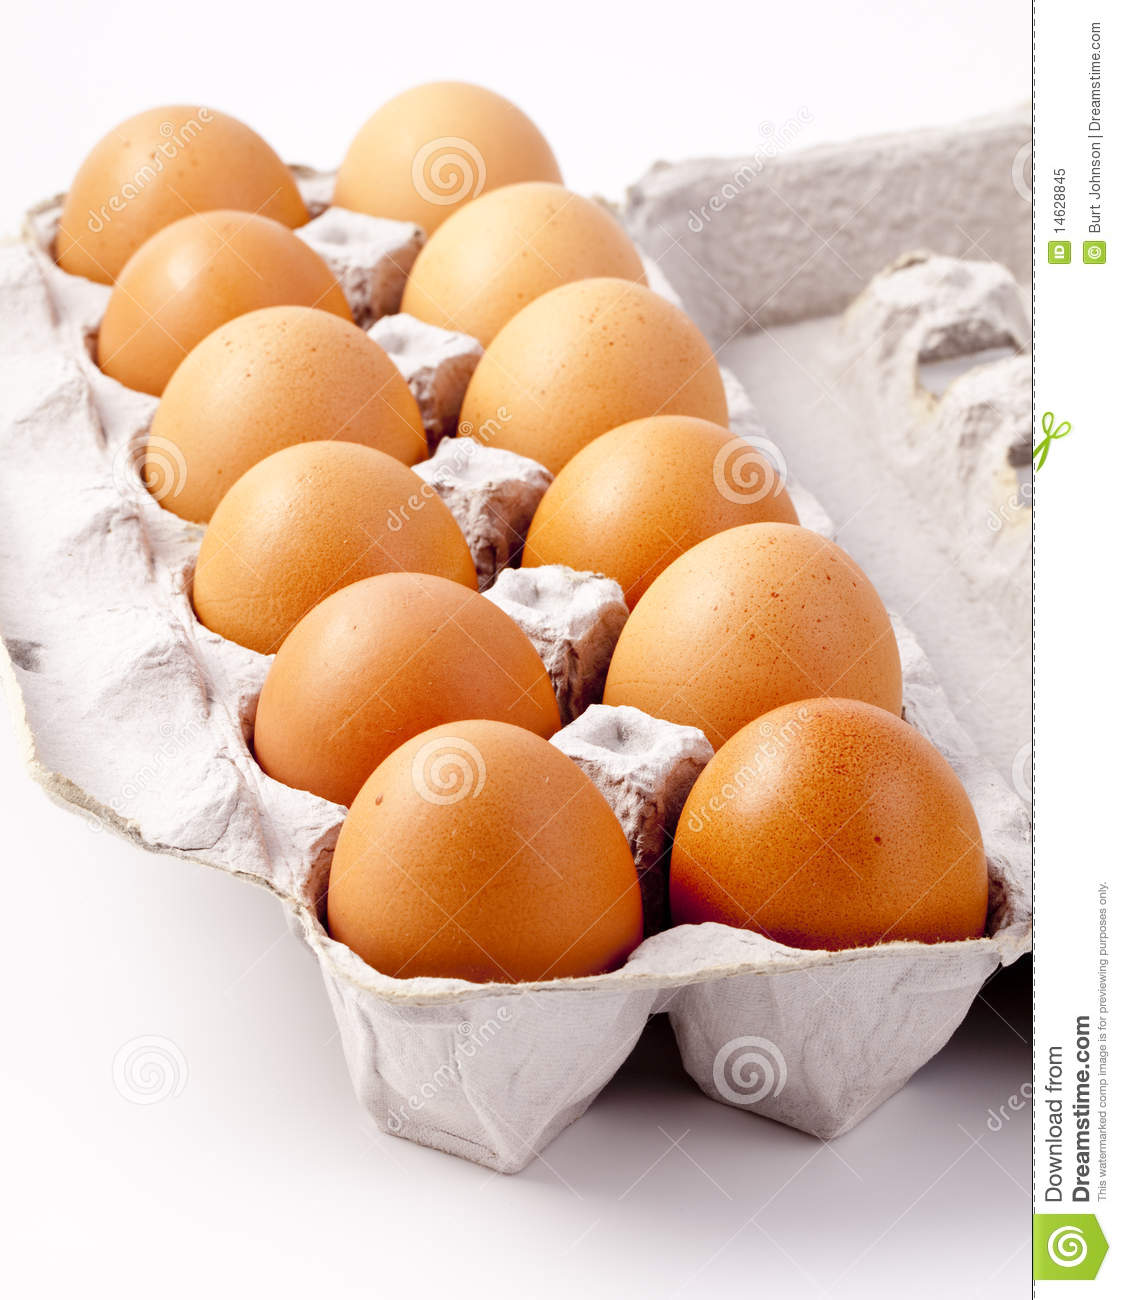 Carton Of Brown Eggs Royalty Free Stock Photo   Image  14628845